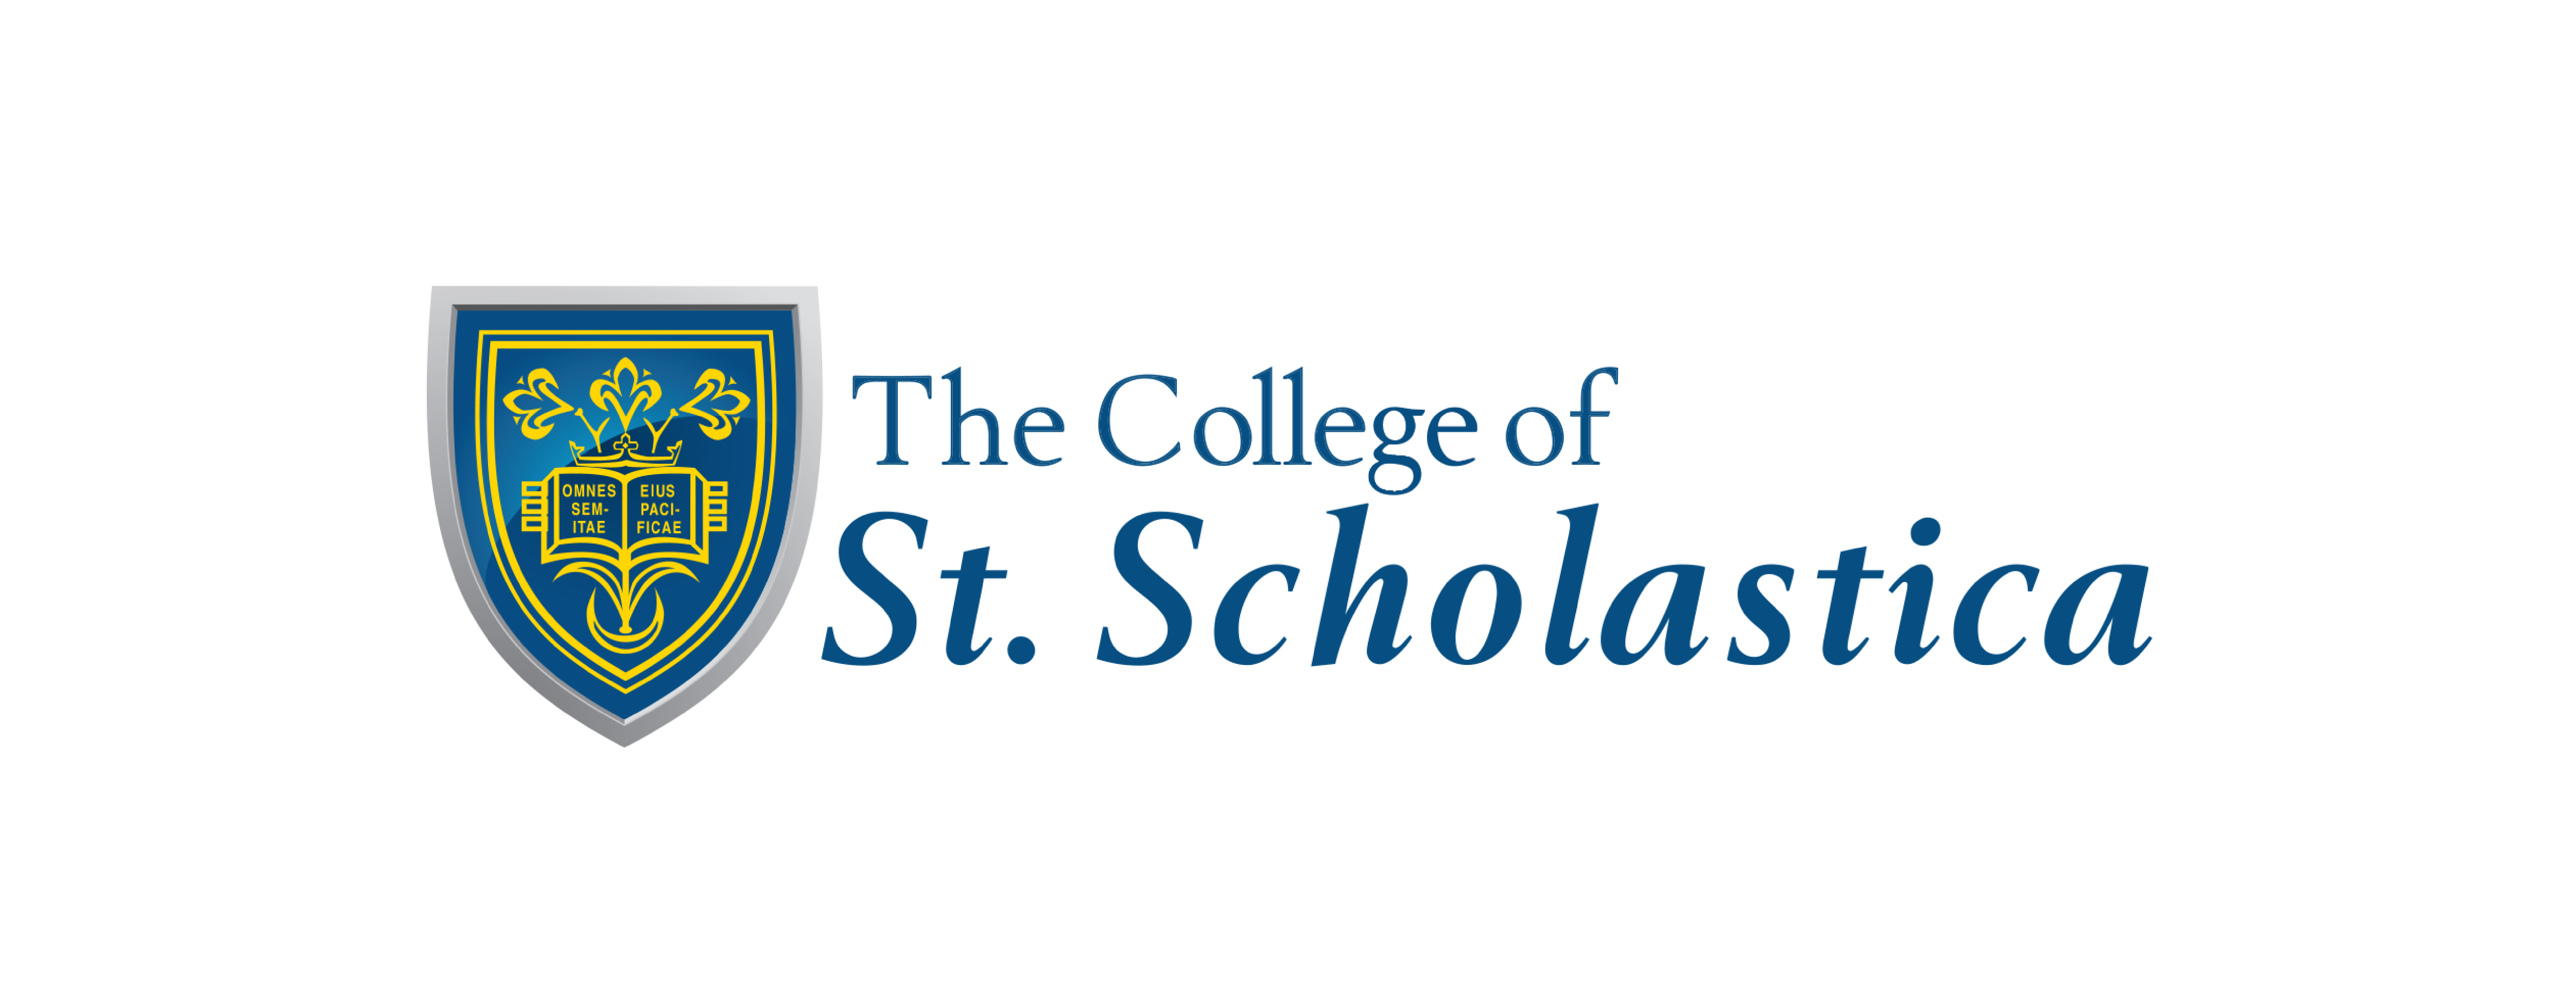 The College of St. Scholastica, logo.